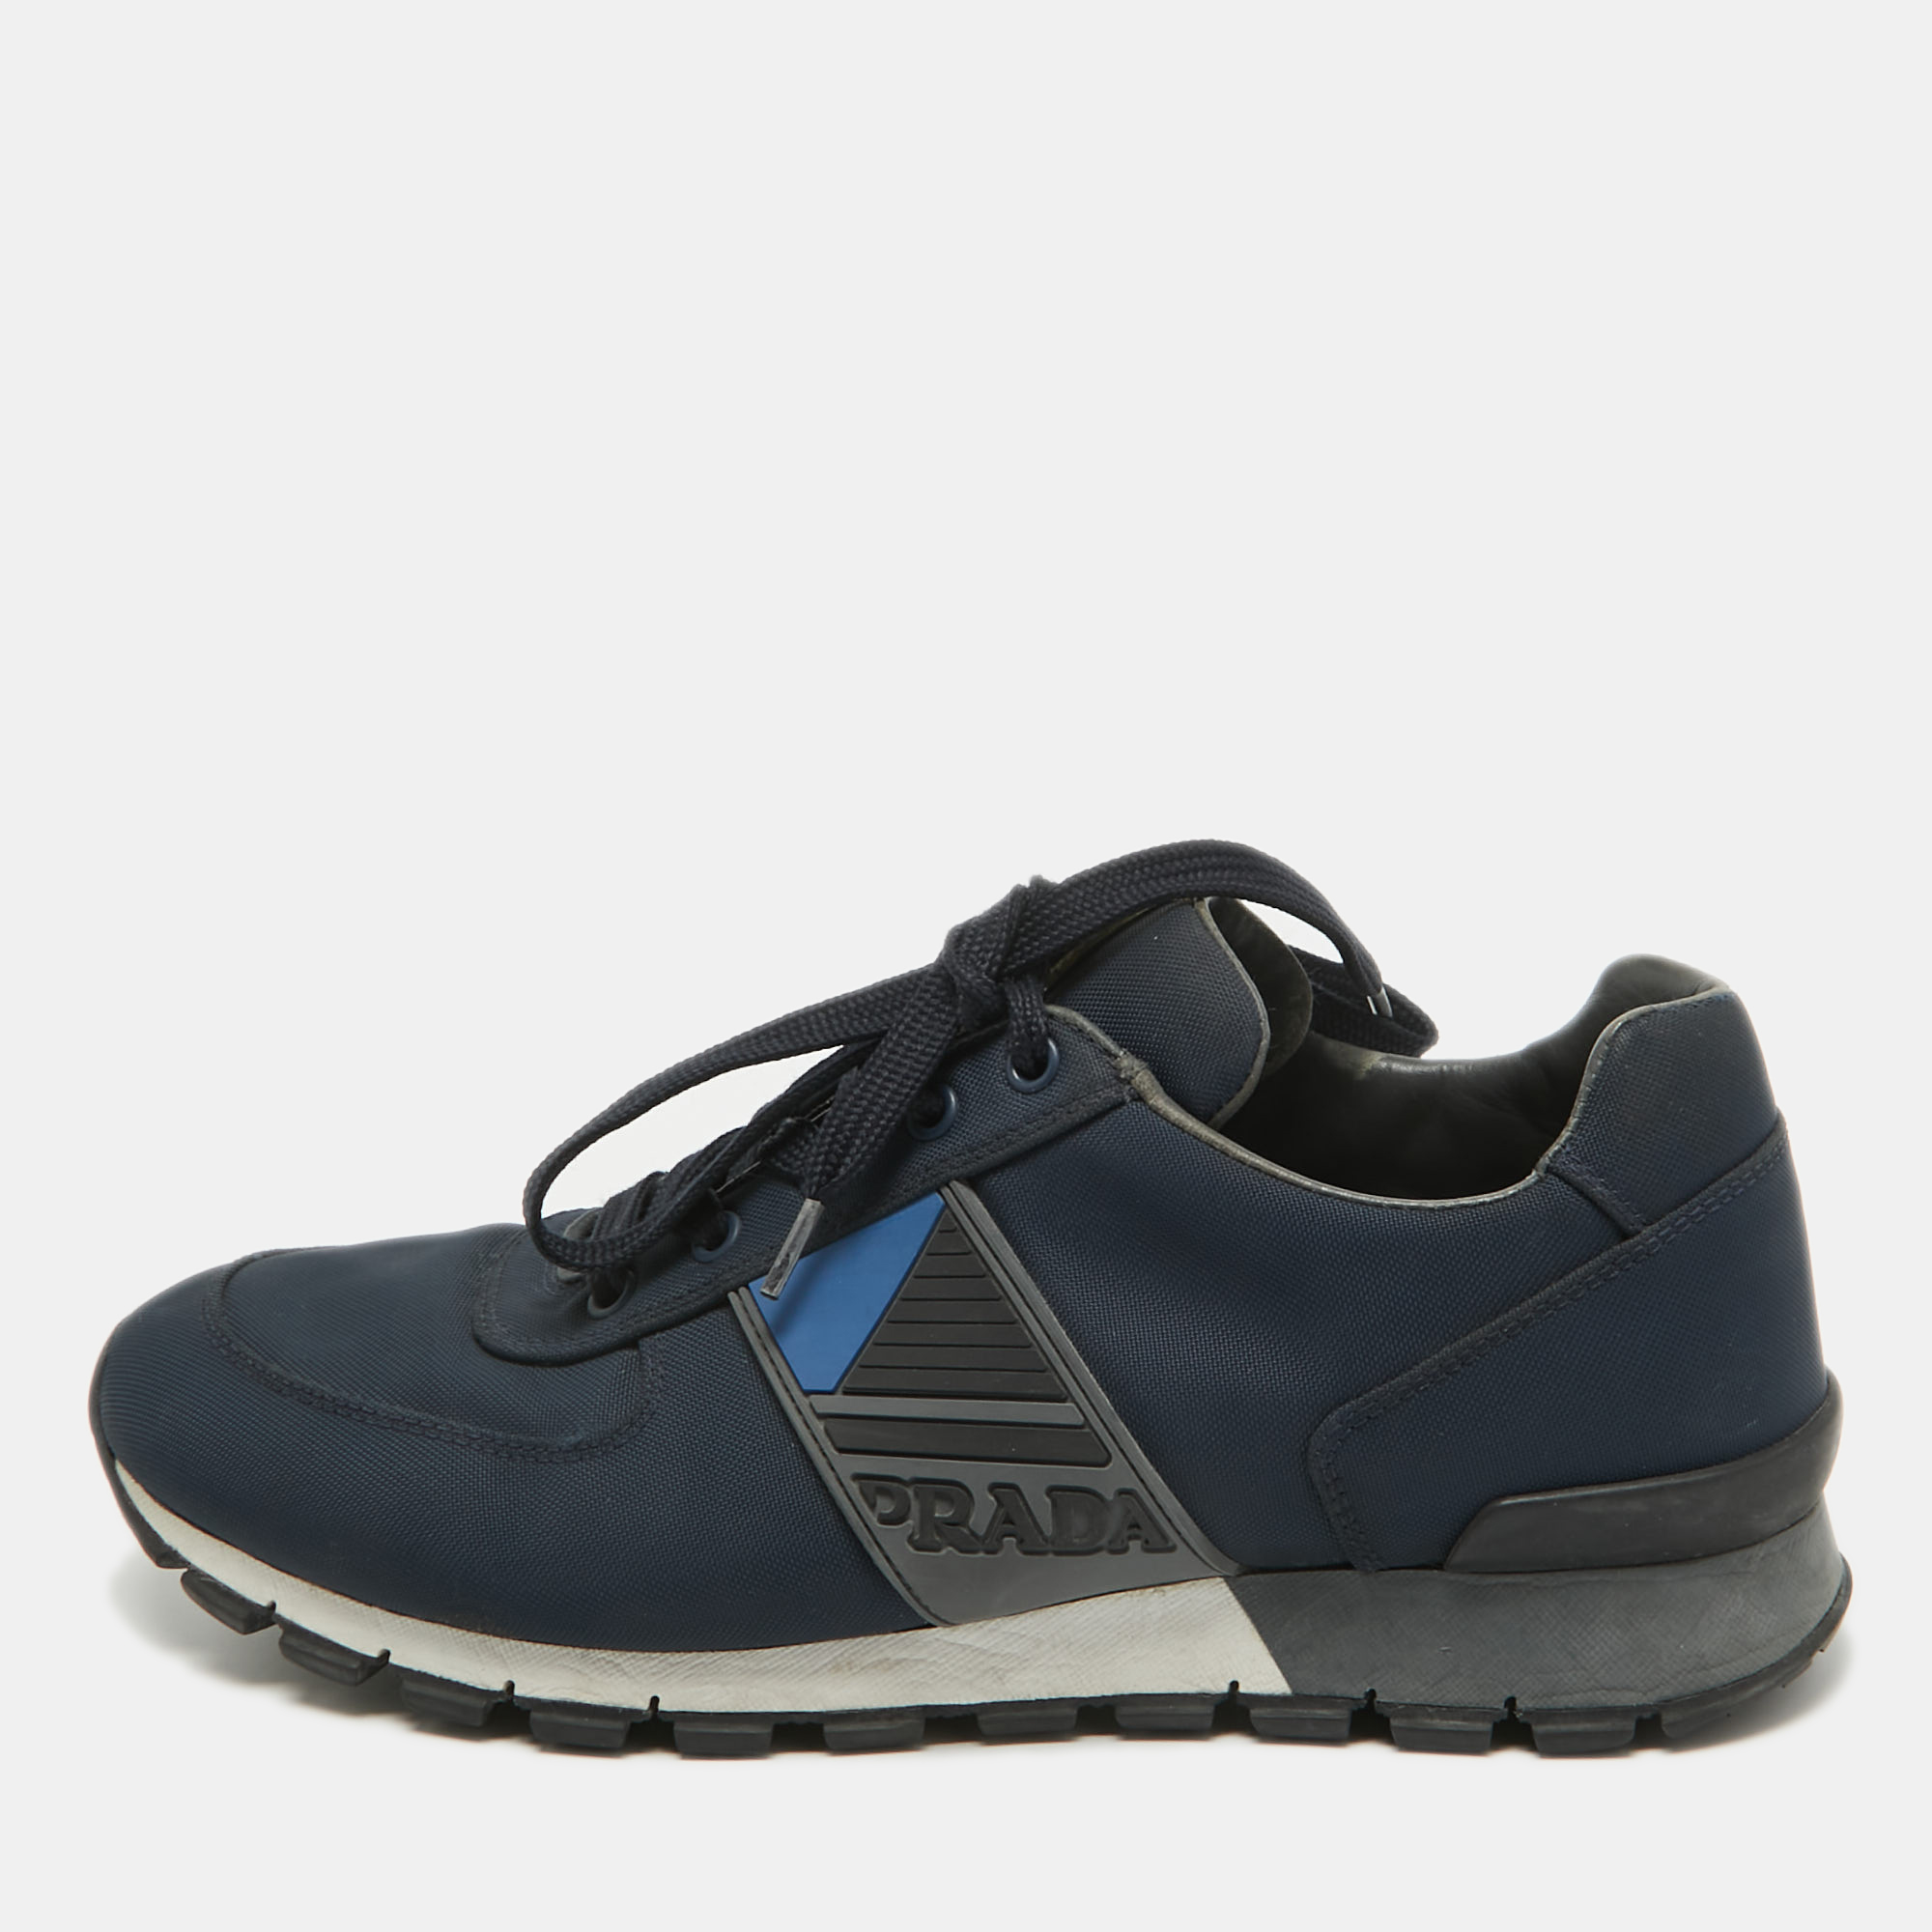 Prada sport navy blue nylon low top sneakers size 41